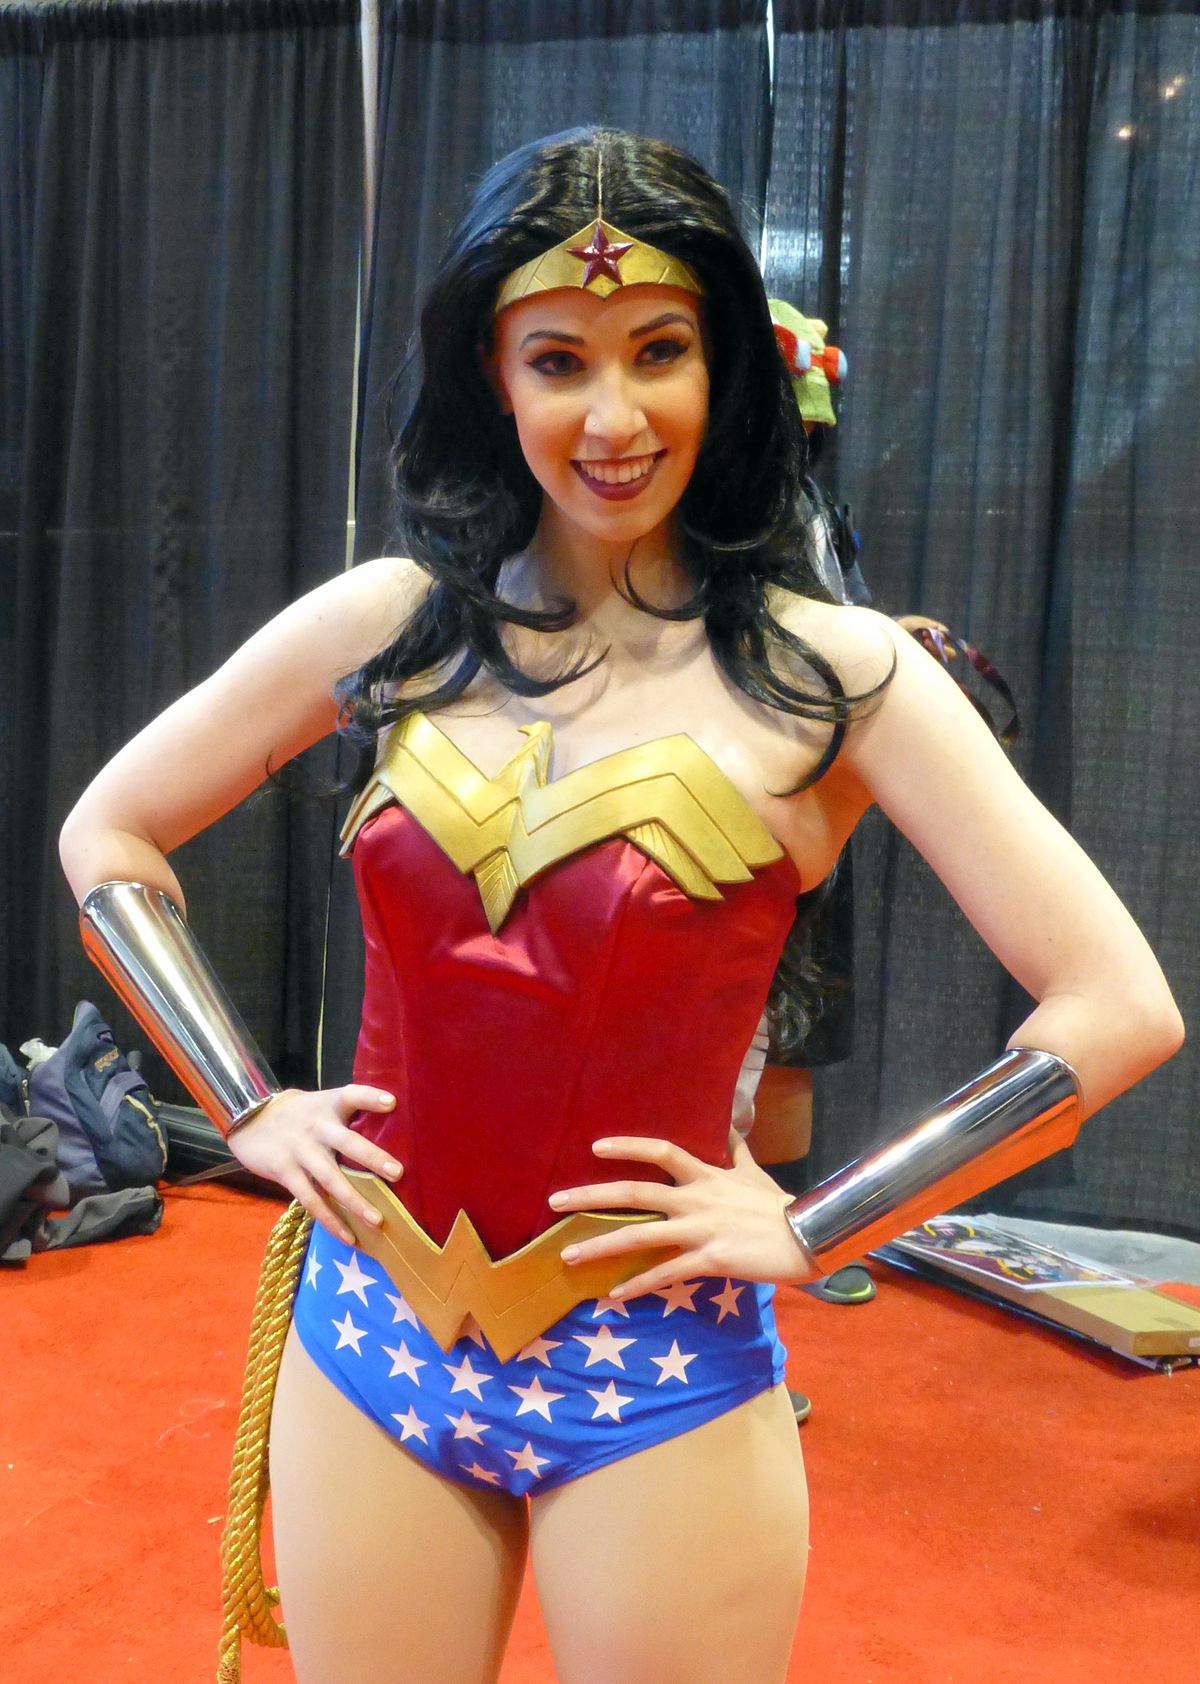 Wonder Woman - Simple English Wikipedia, the free encyclopedia